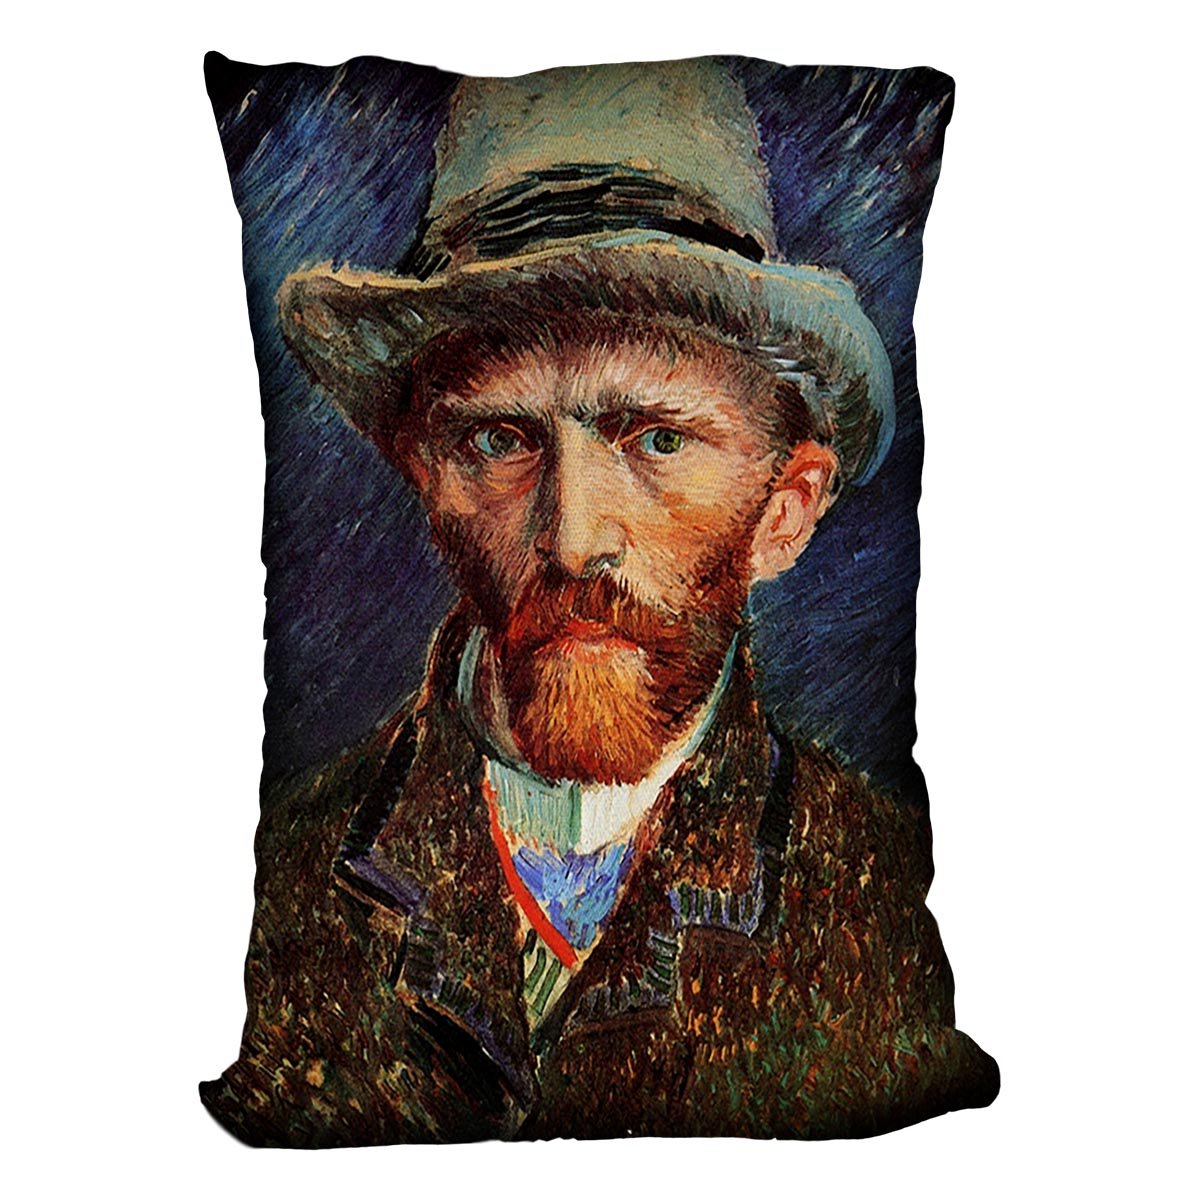 Self-Portrait with Grey Felt Hat by Van Gogh Throw Pillow